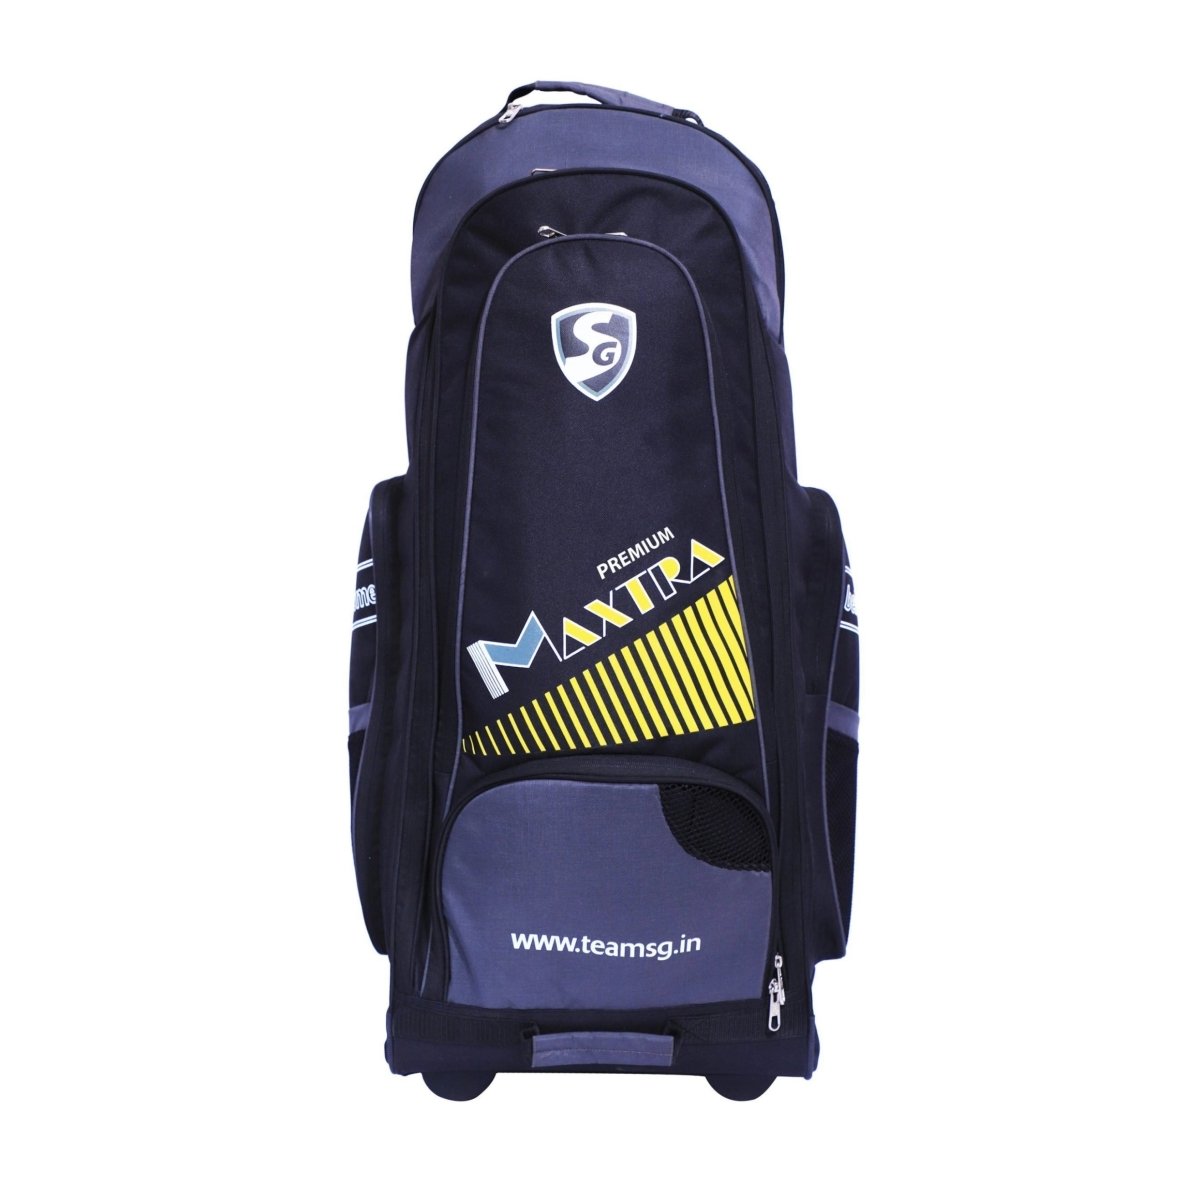 SG Maxtra Premium Cricket Kit Bag